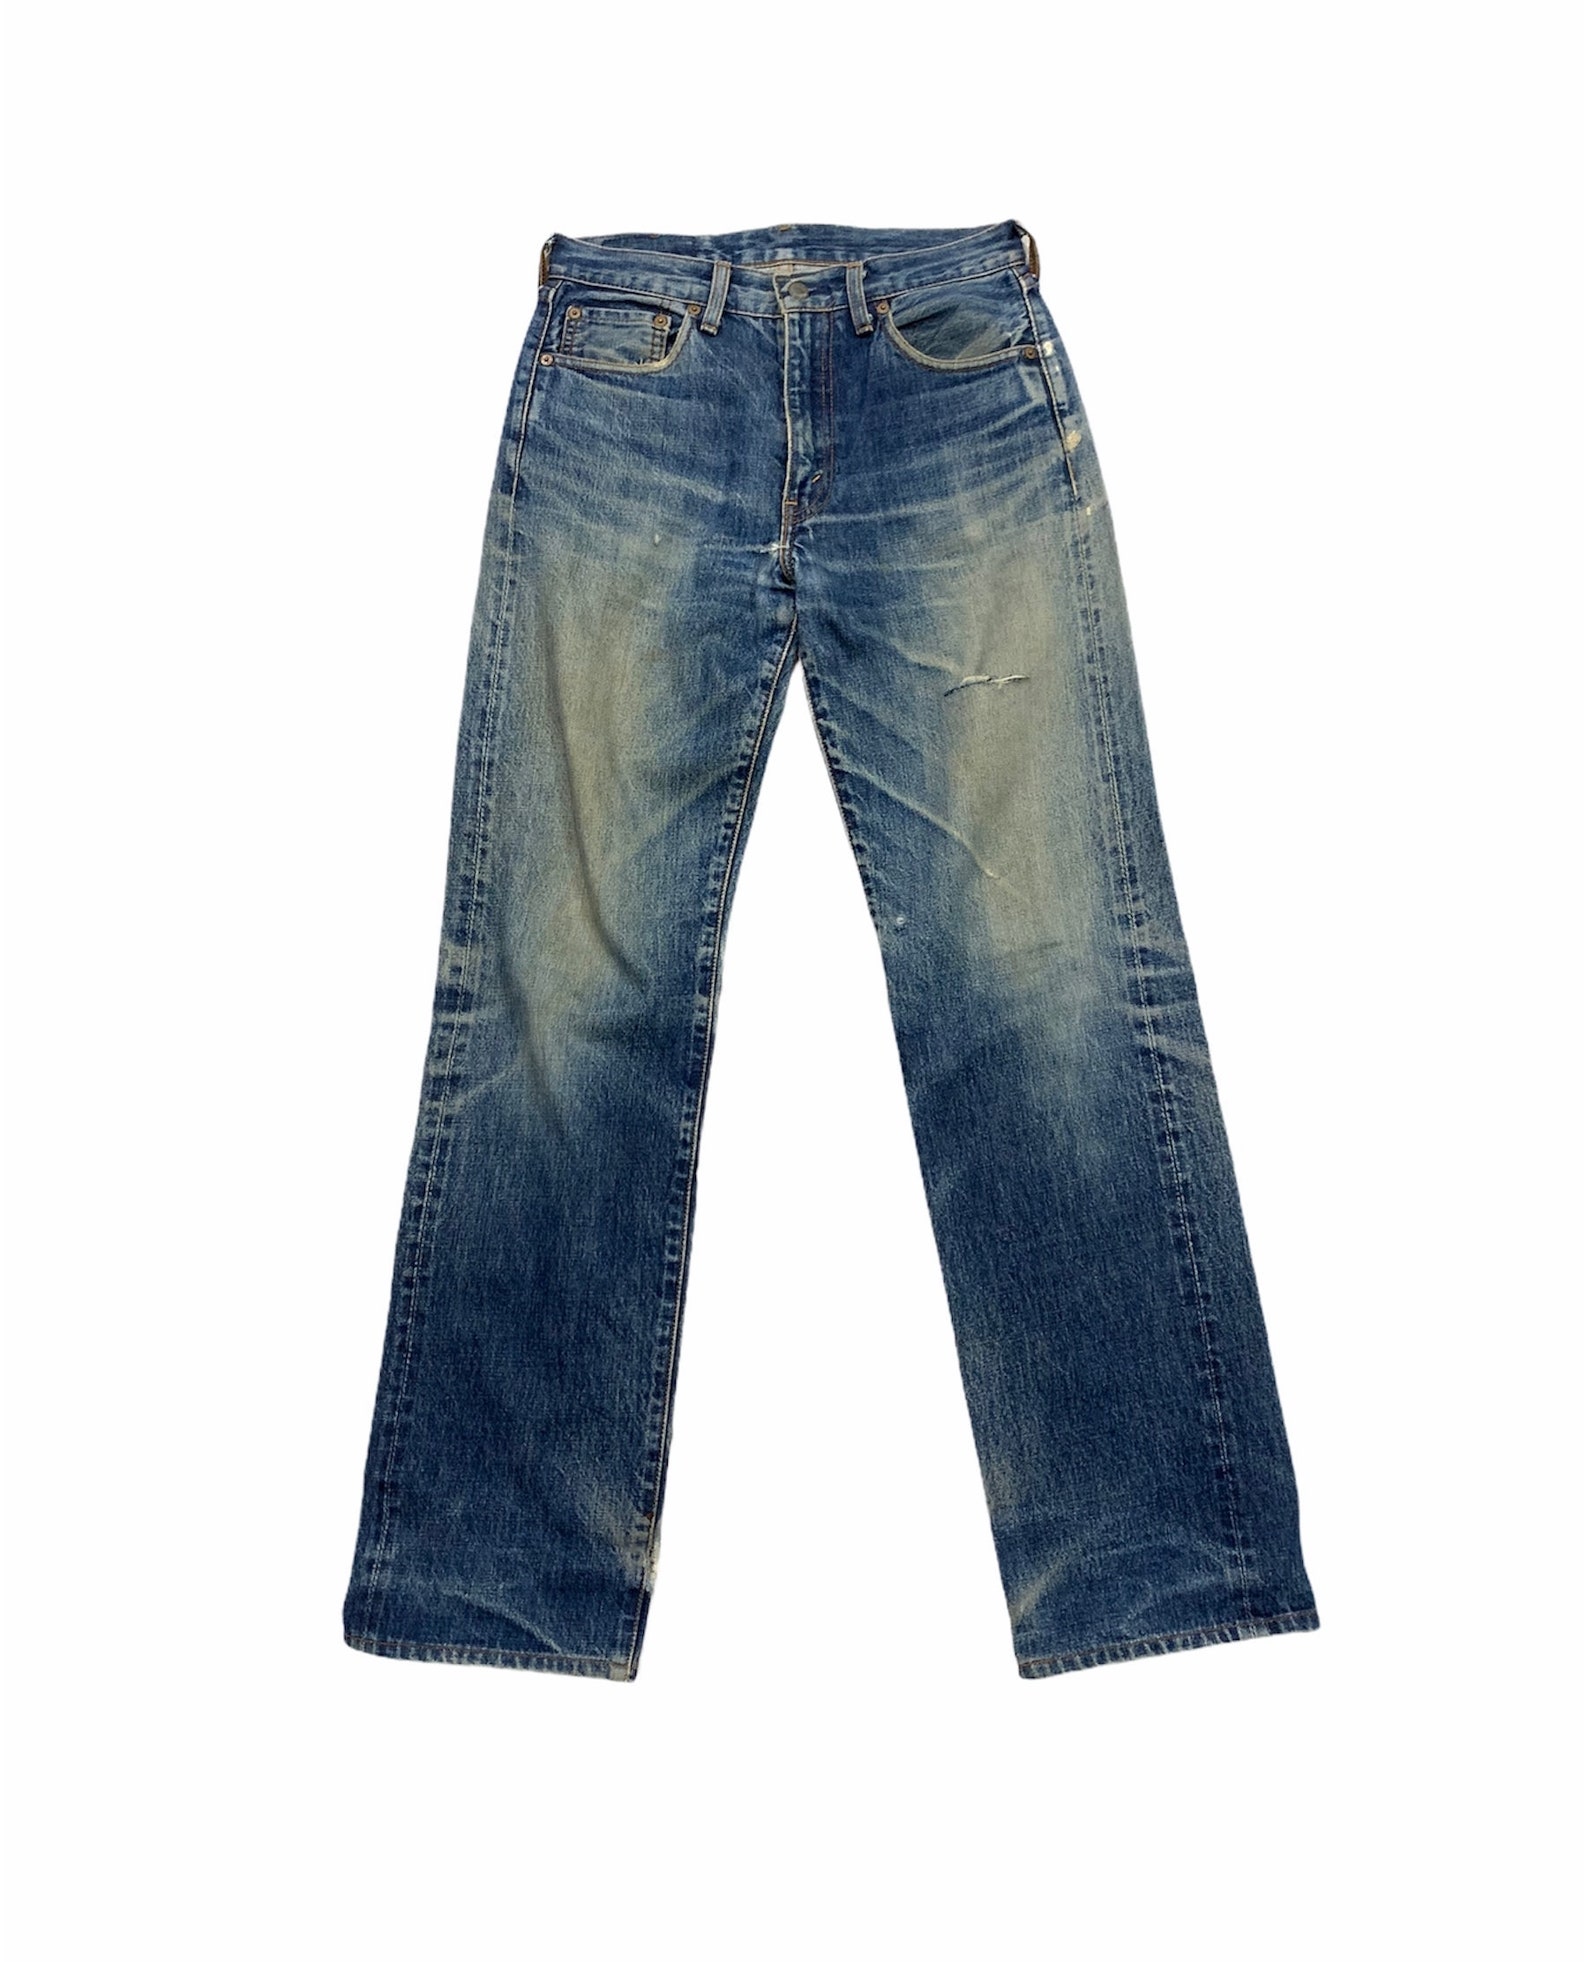 Rare Levis 502 big E redline vintage distressed jeans | Etsy